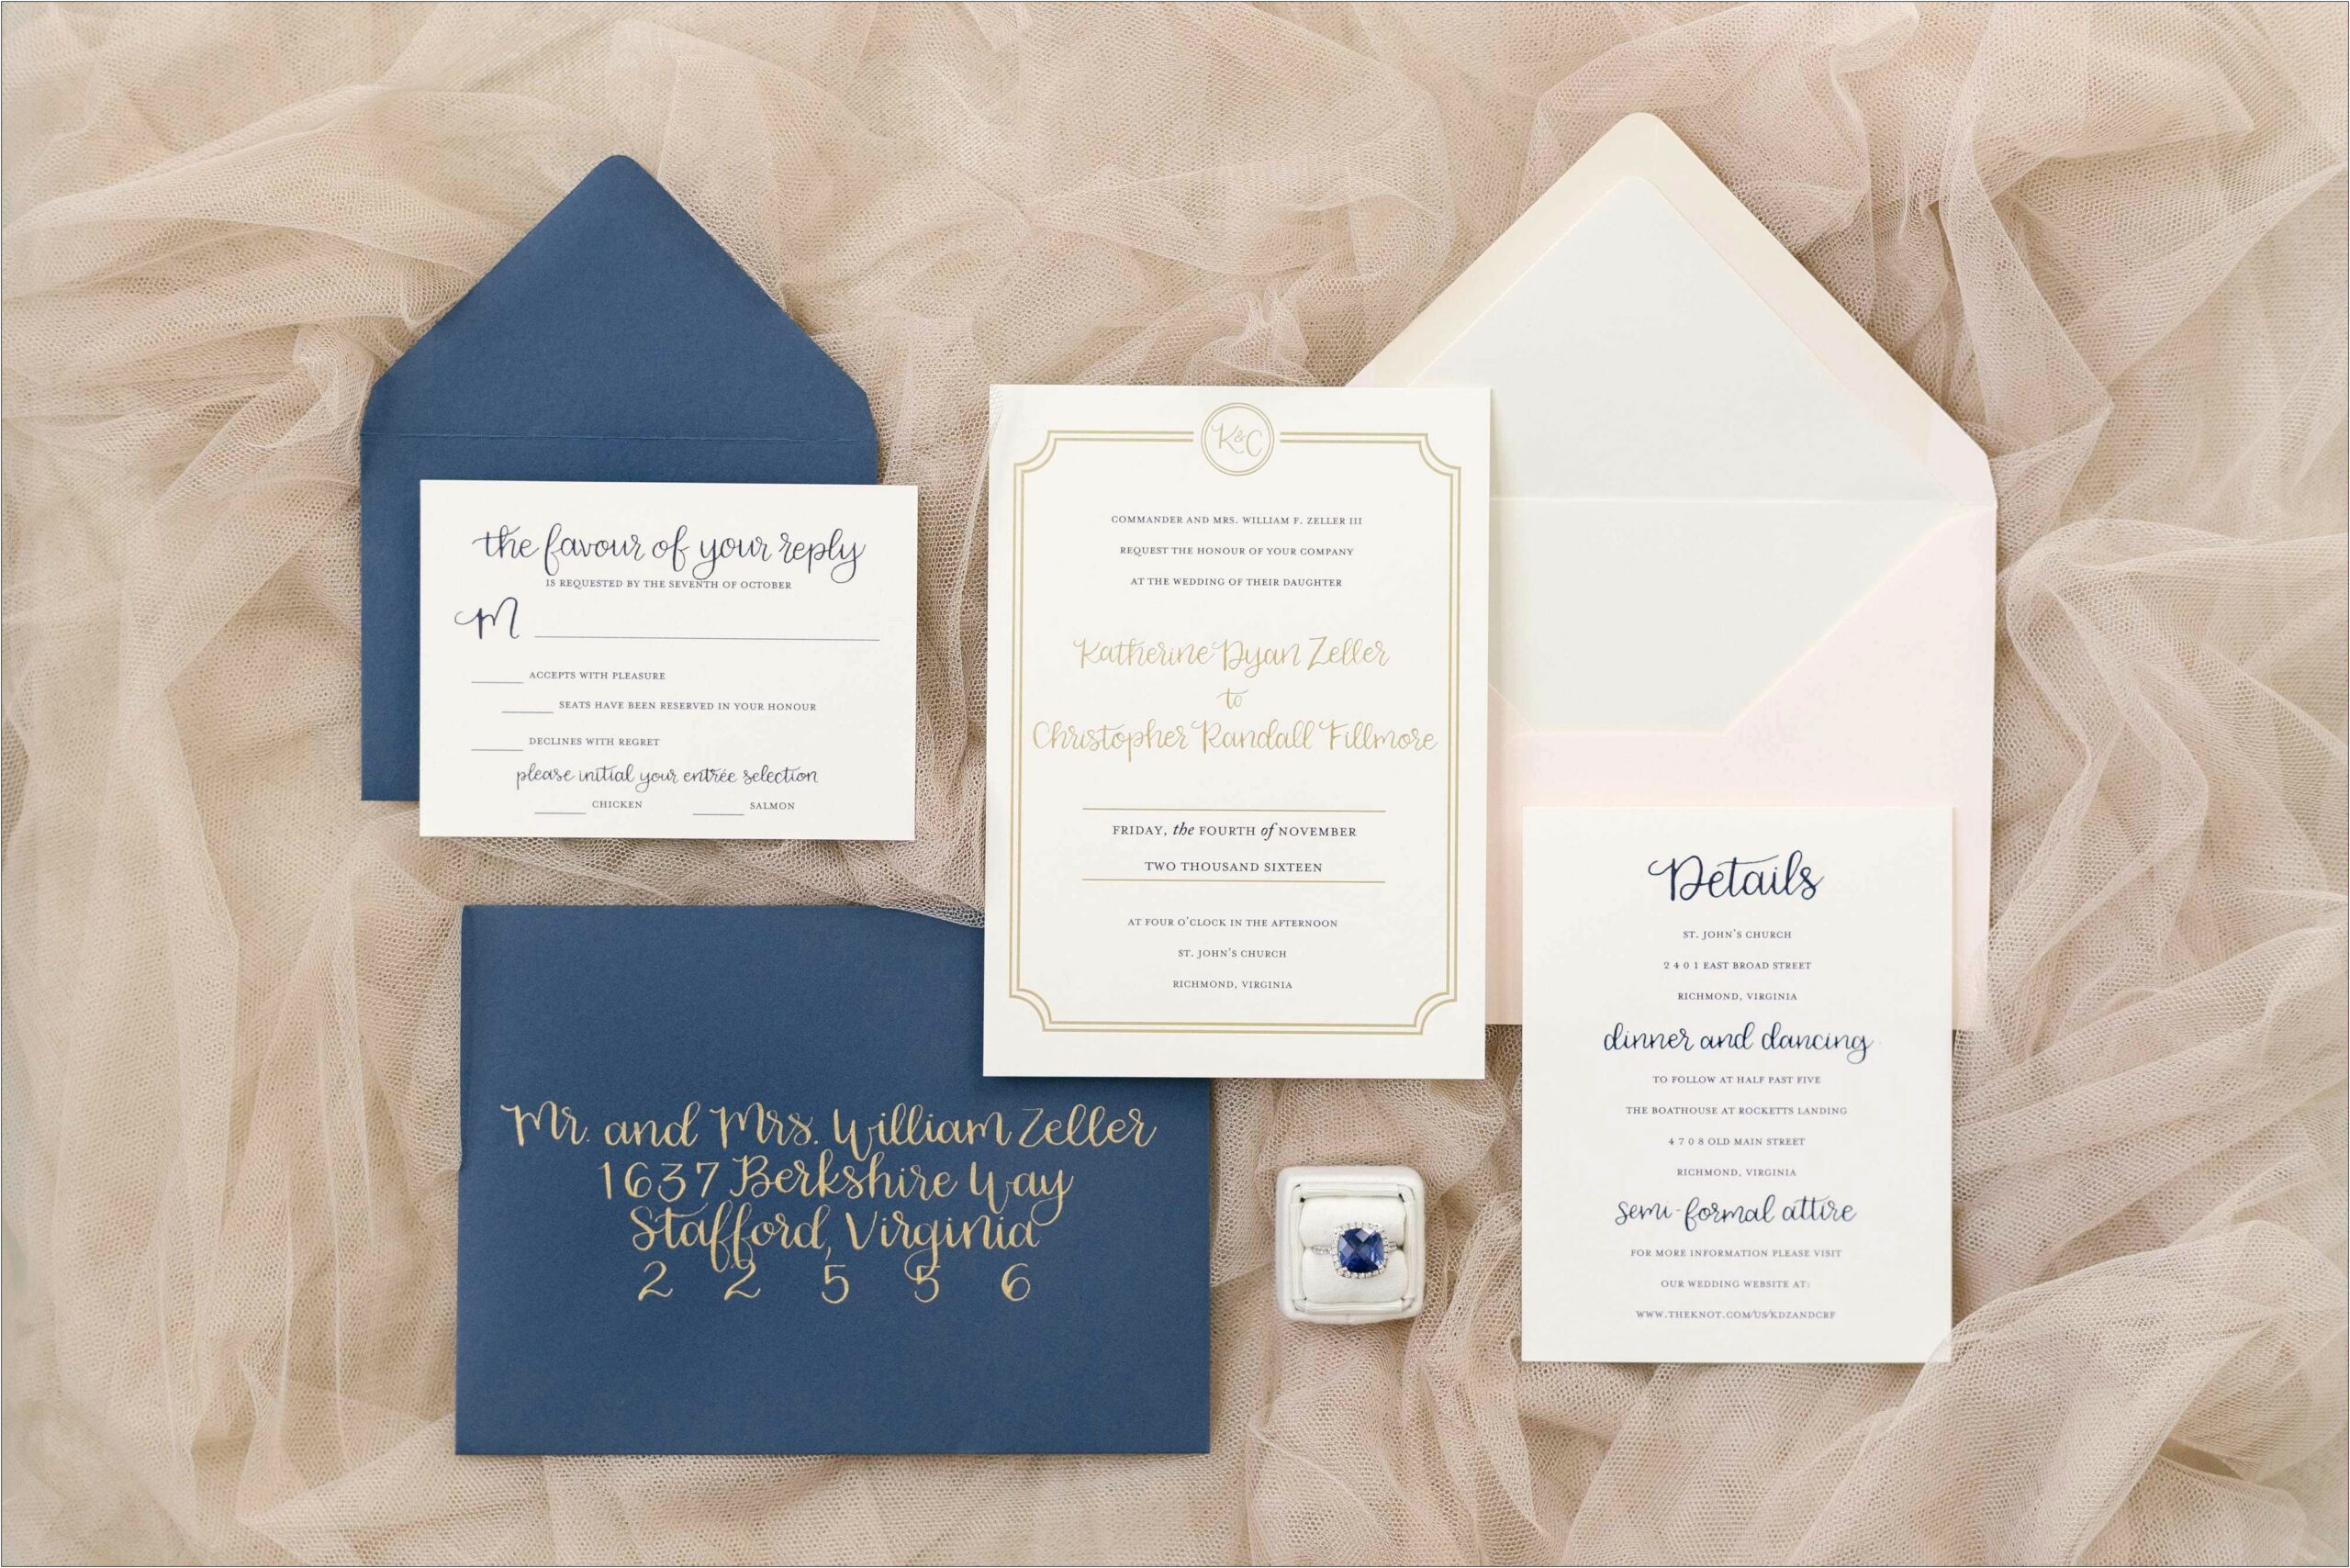 Addressing Wedding Invitations Using Only One Envelope